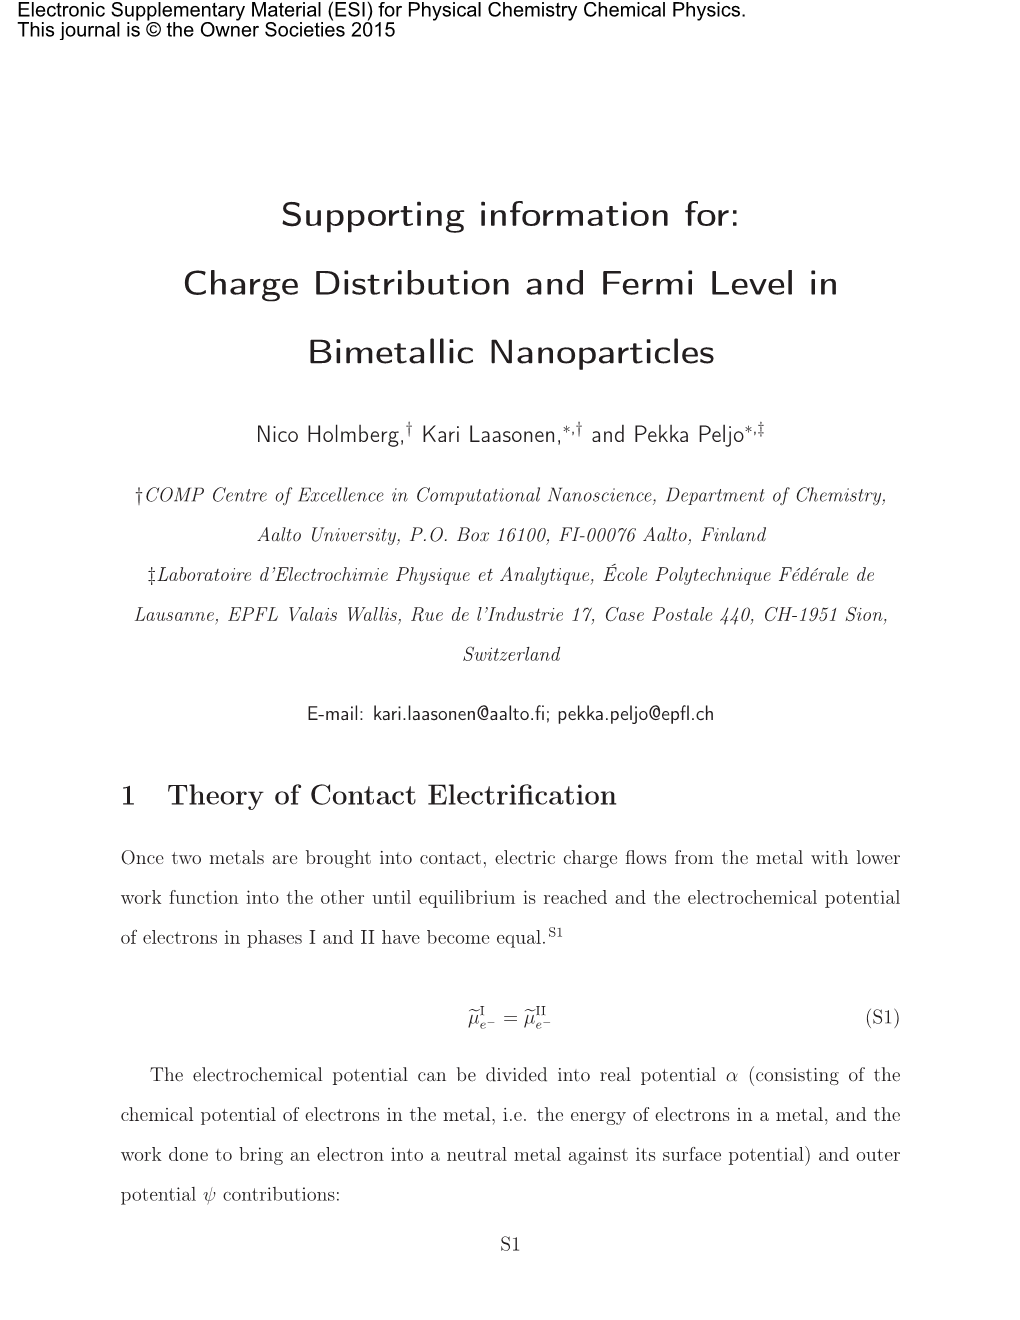 Charge Distribution and Fermi Level in Bimetallic Nanoparticles